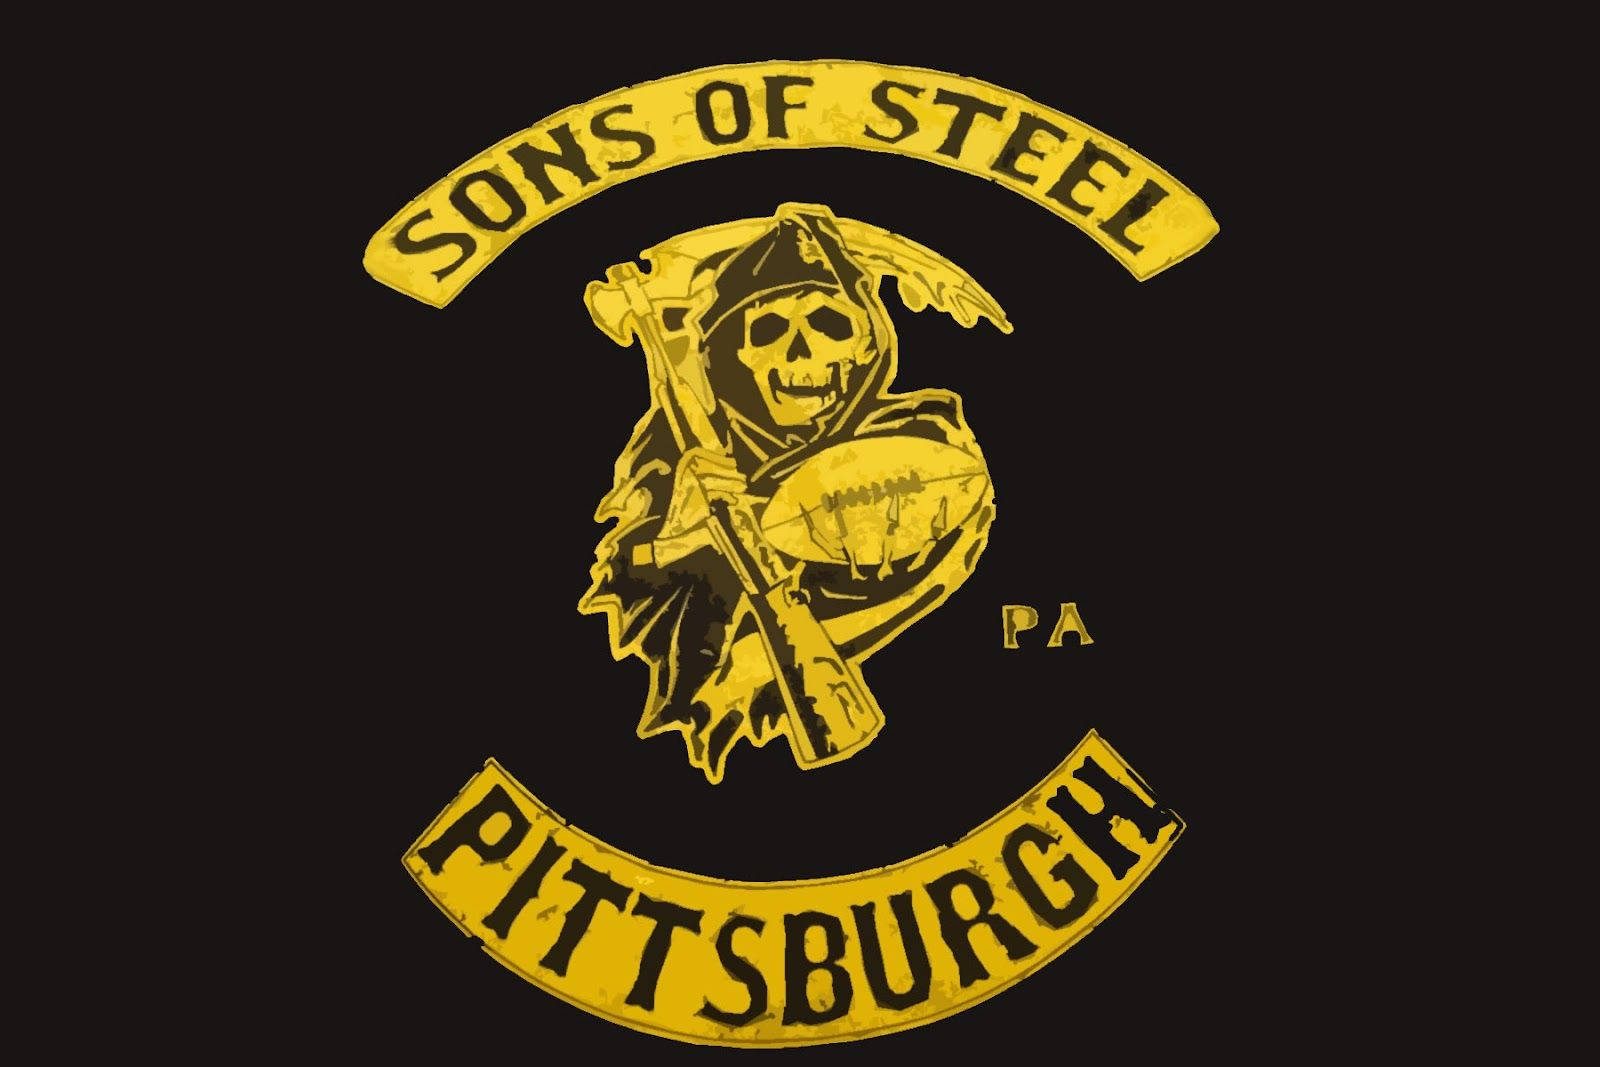 Sons Of Steel Steelers Background